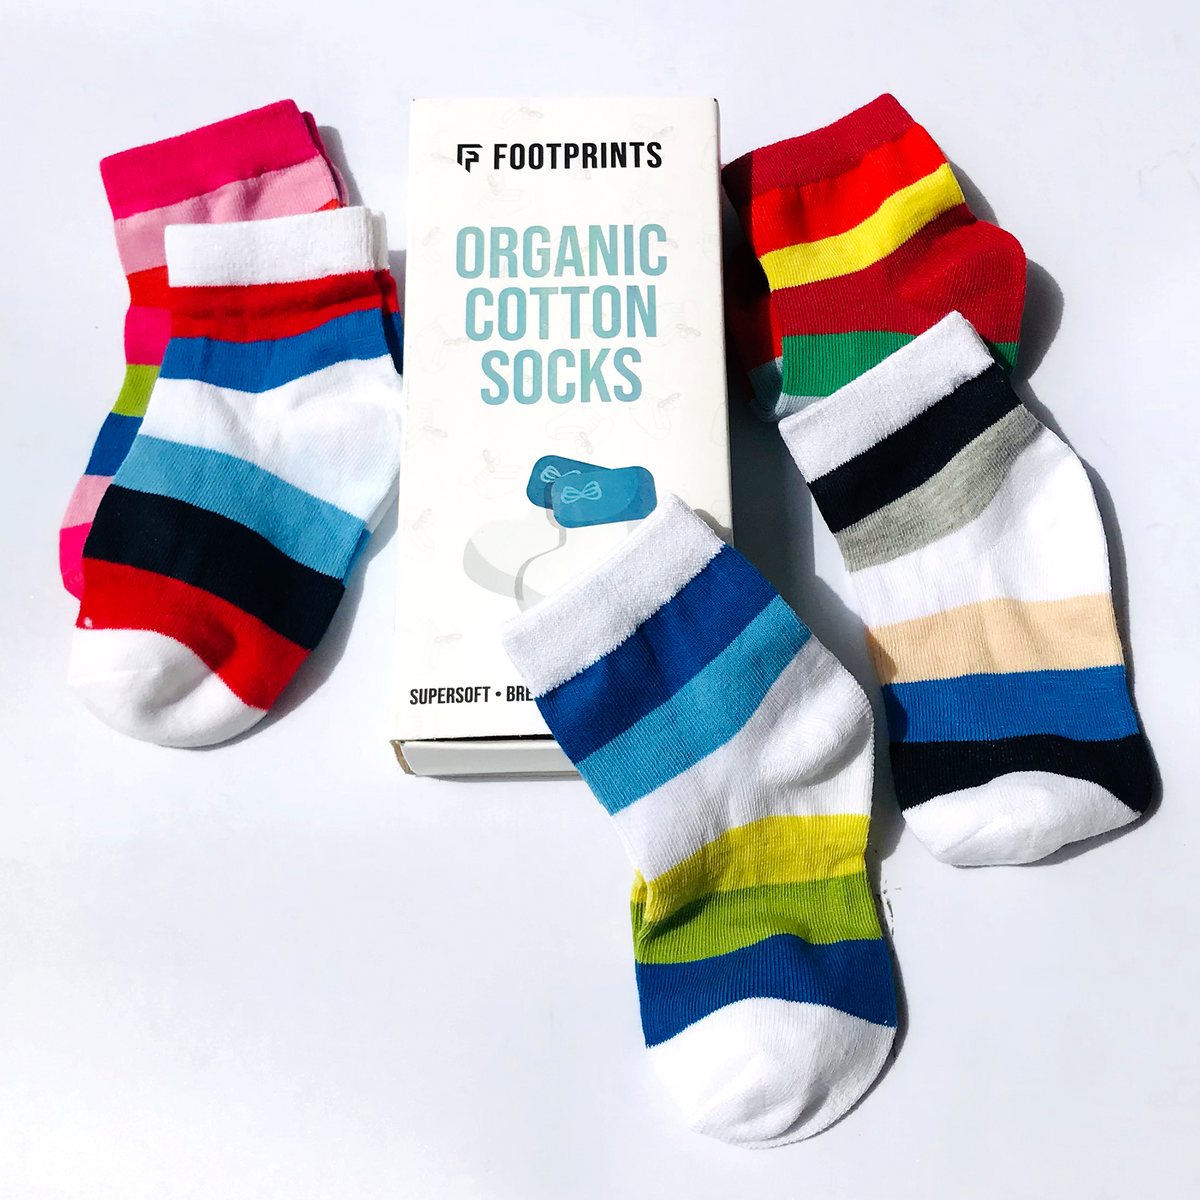 FOOTPRINTS Organic cotton Baby Socks - Pack of 5 Pairs - Rainbow Stripes